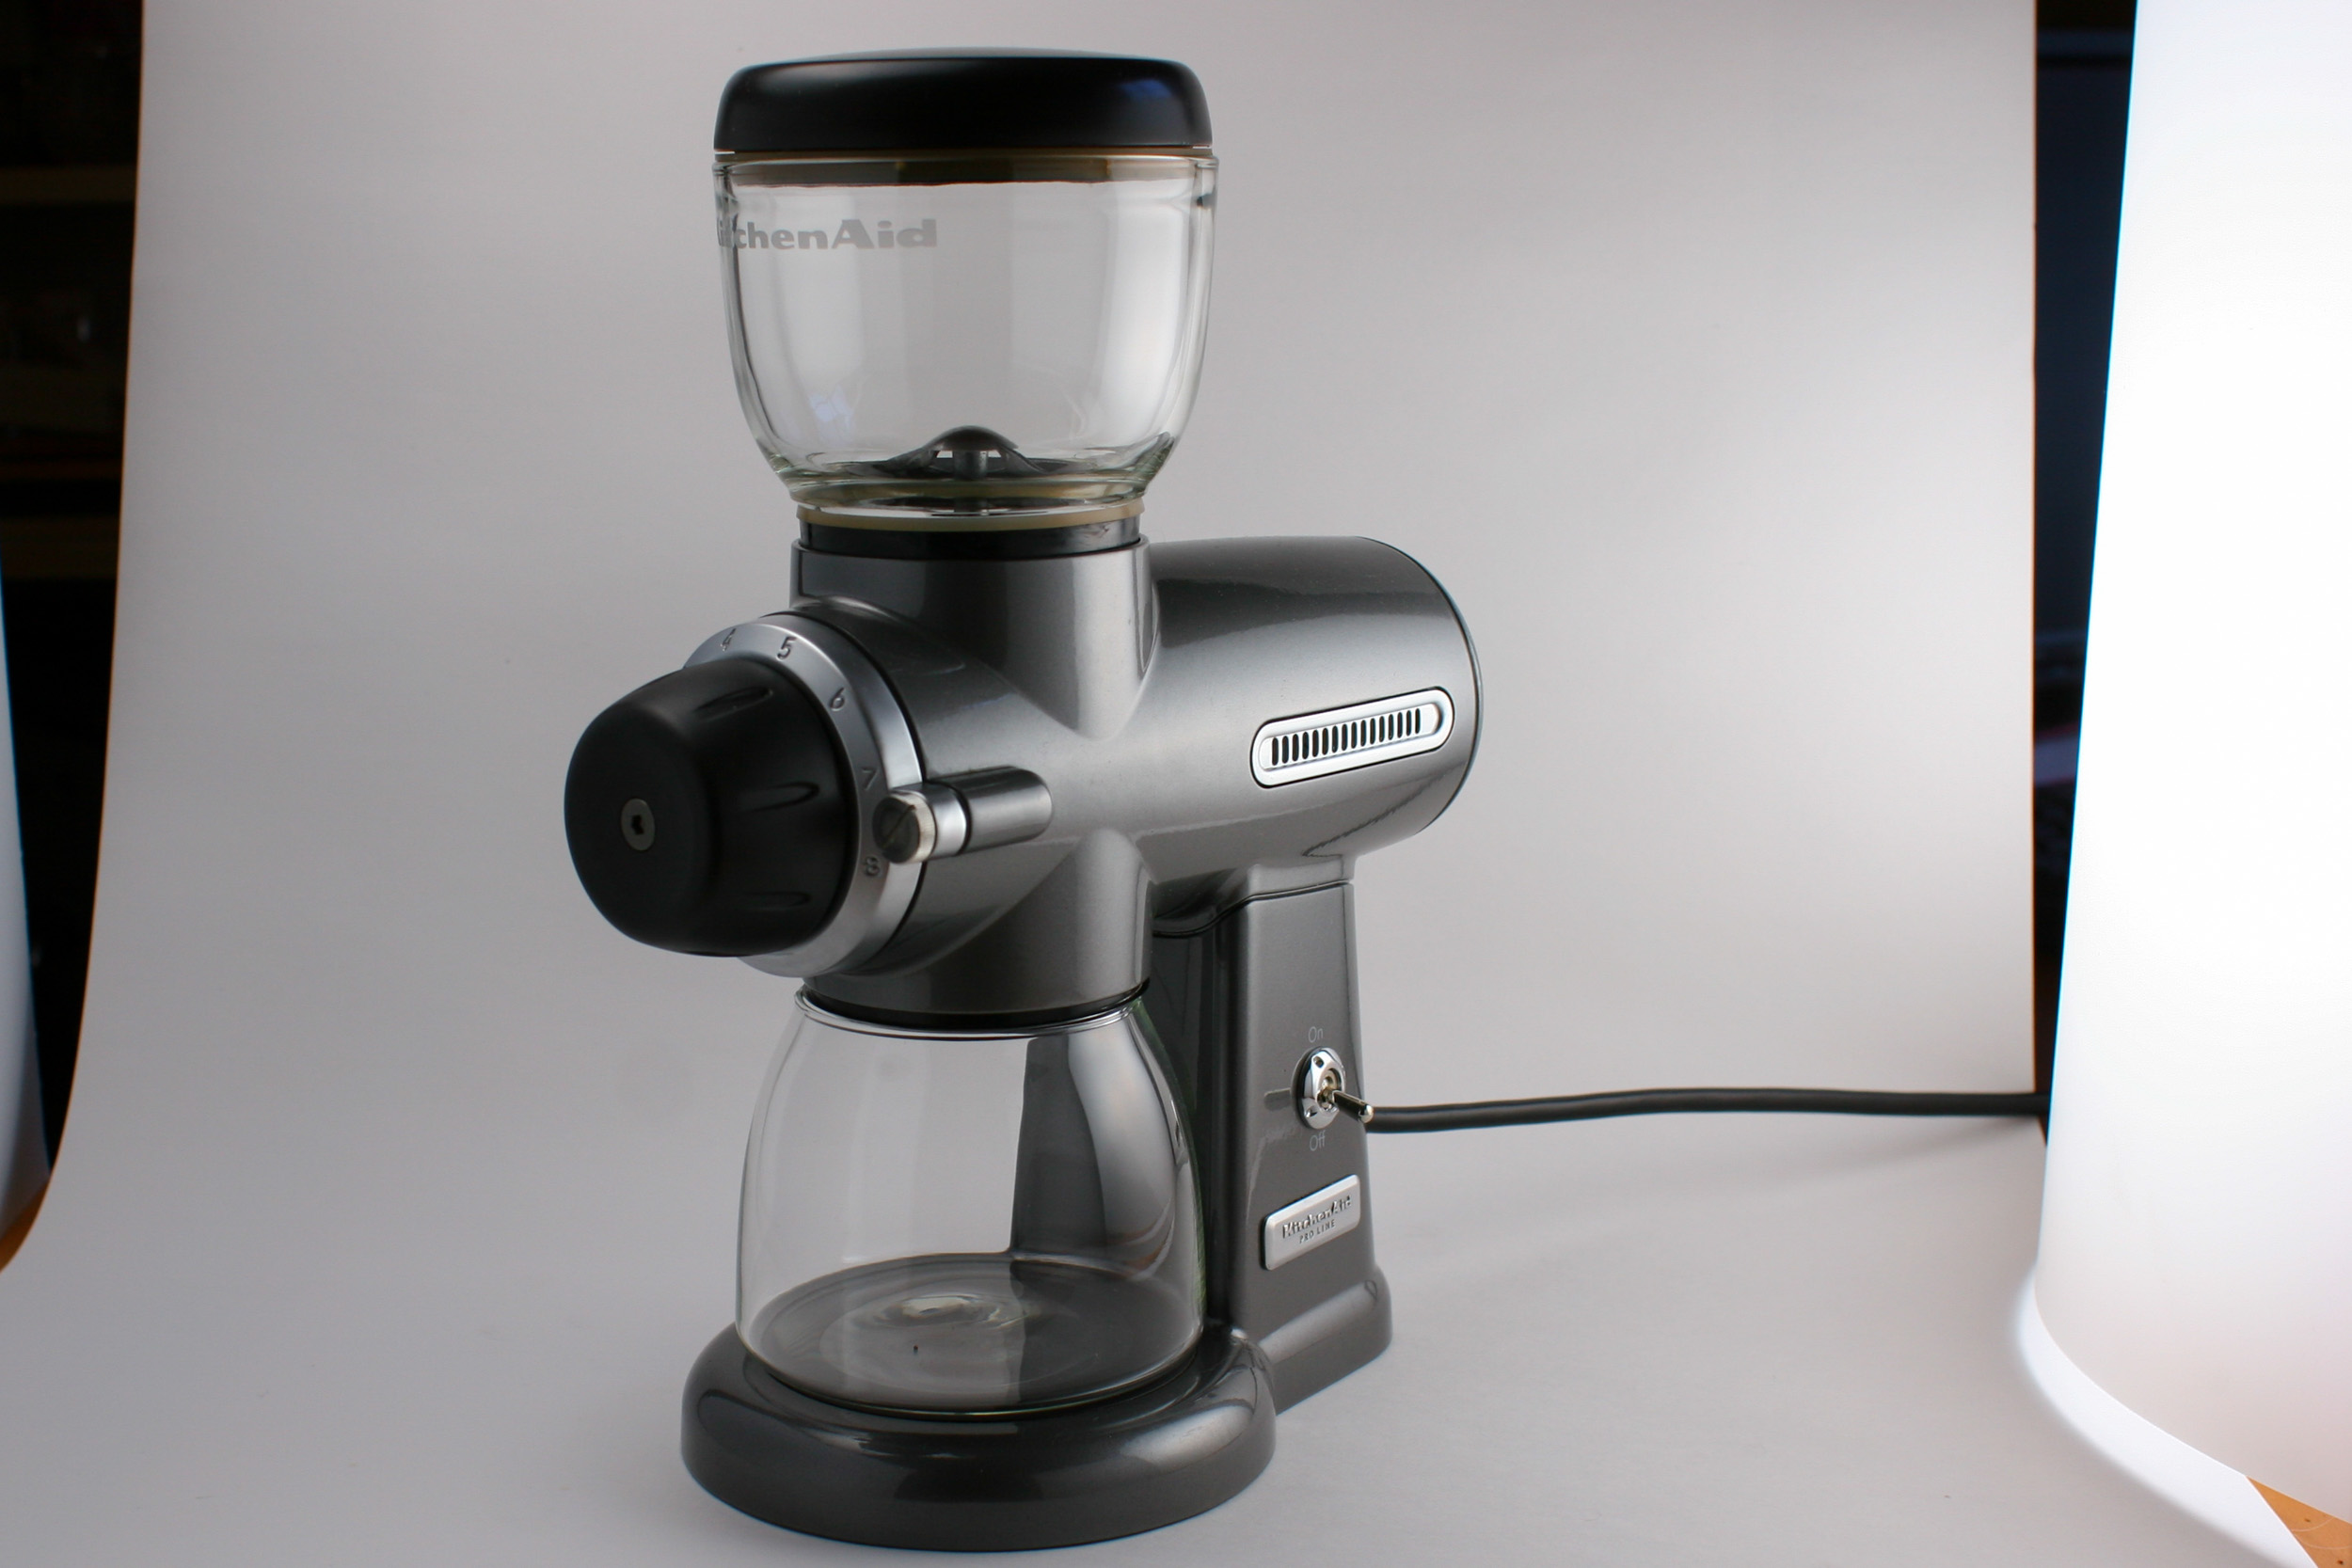 KitchenAid Matte Black Espresso Machine and Burr Grinder Set + Reviews